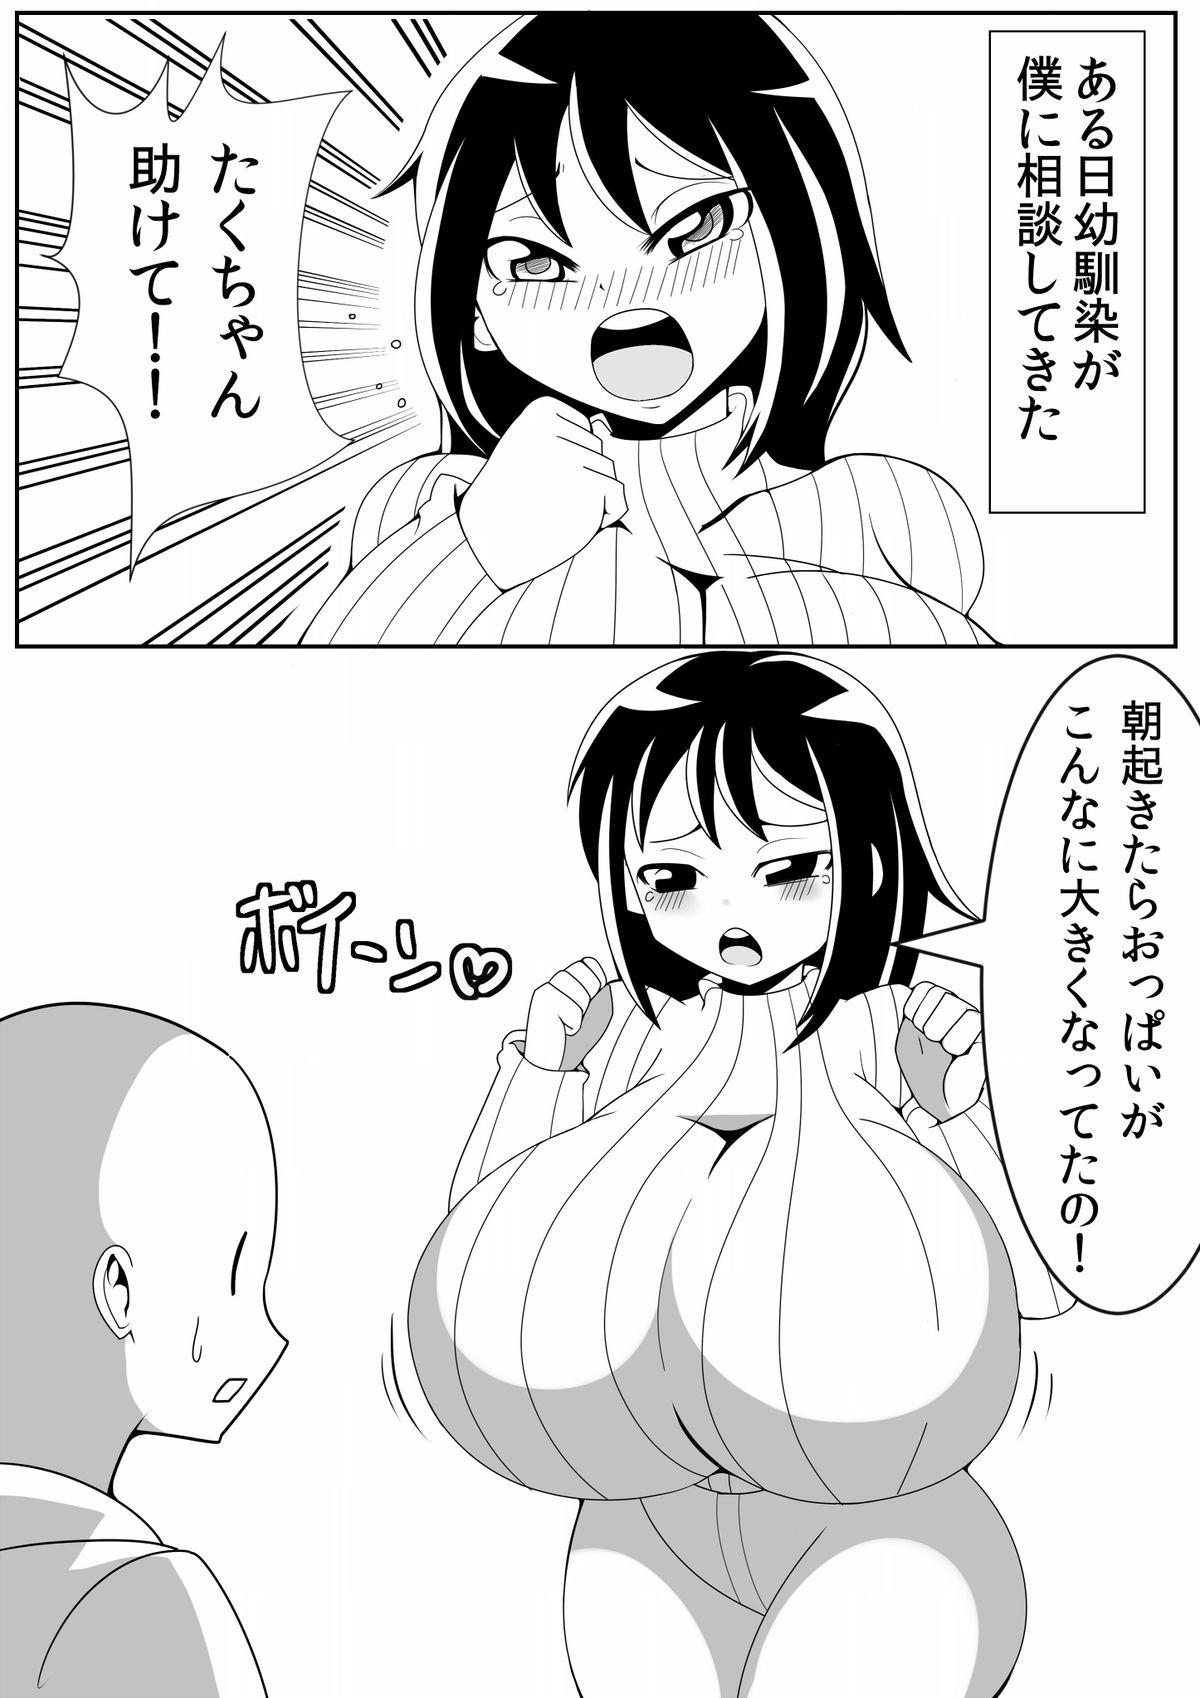 Teensex Asaokitara Oppai Konnani ga Okkiku Nacchatta Masturbating - Page 3